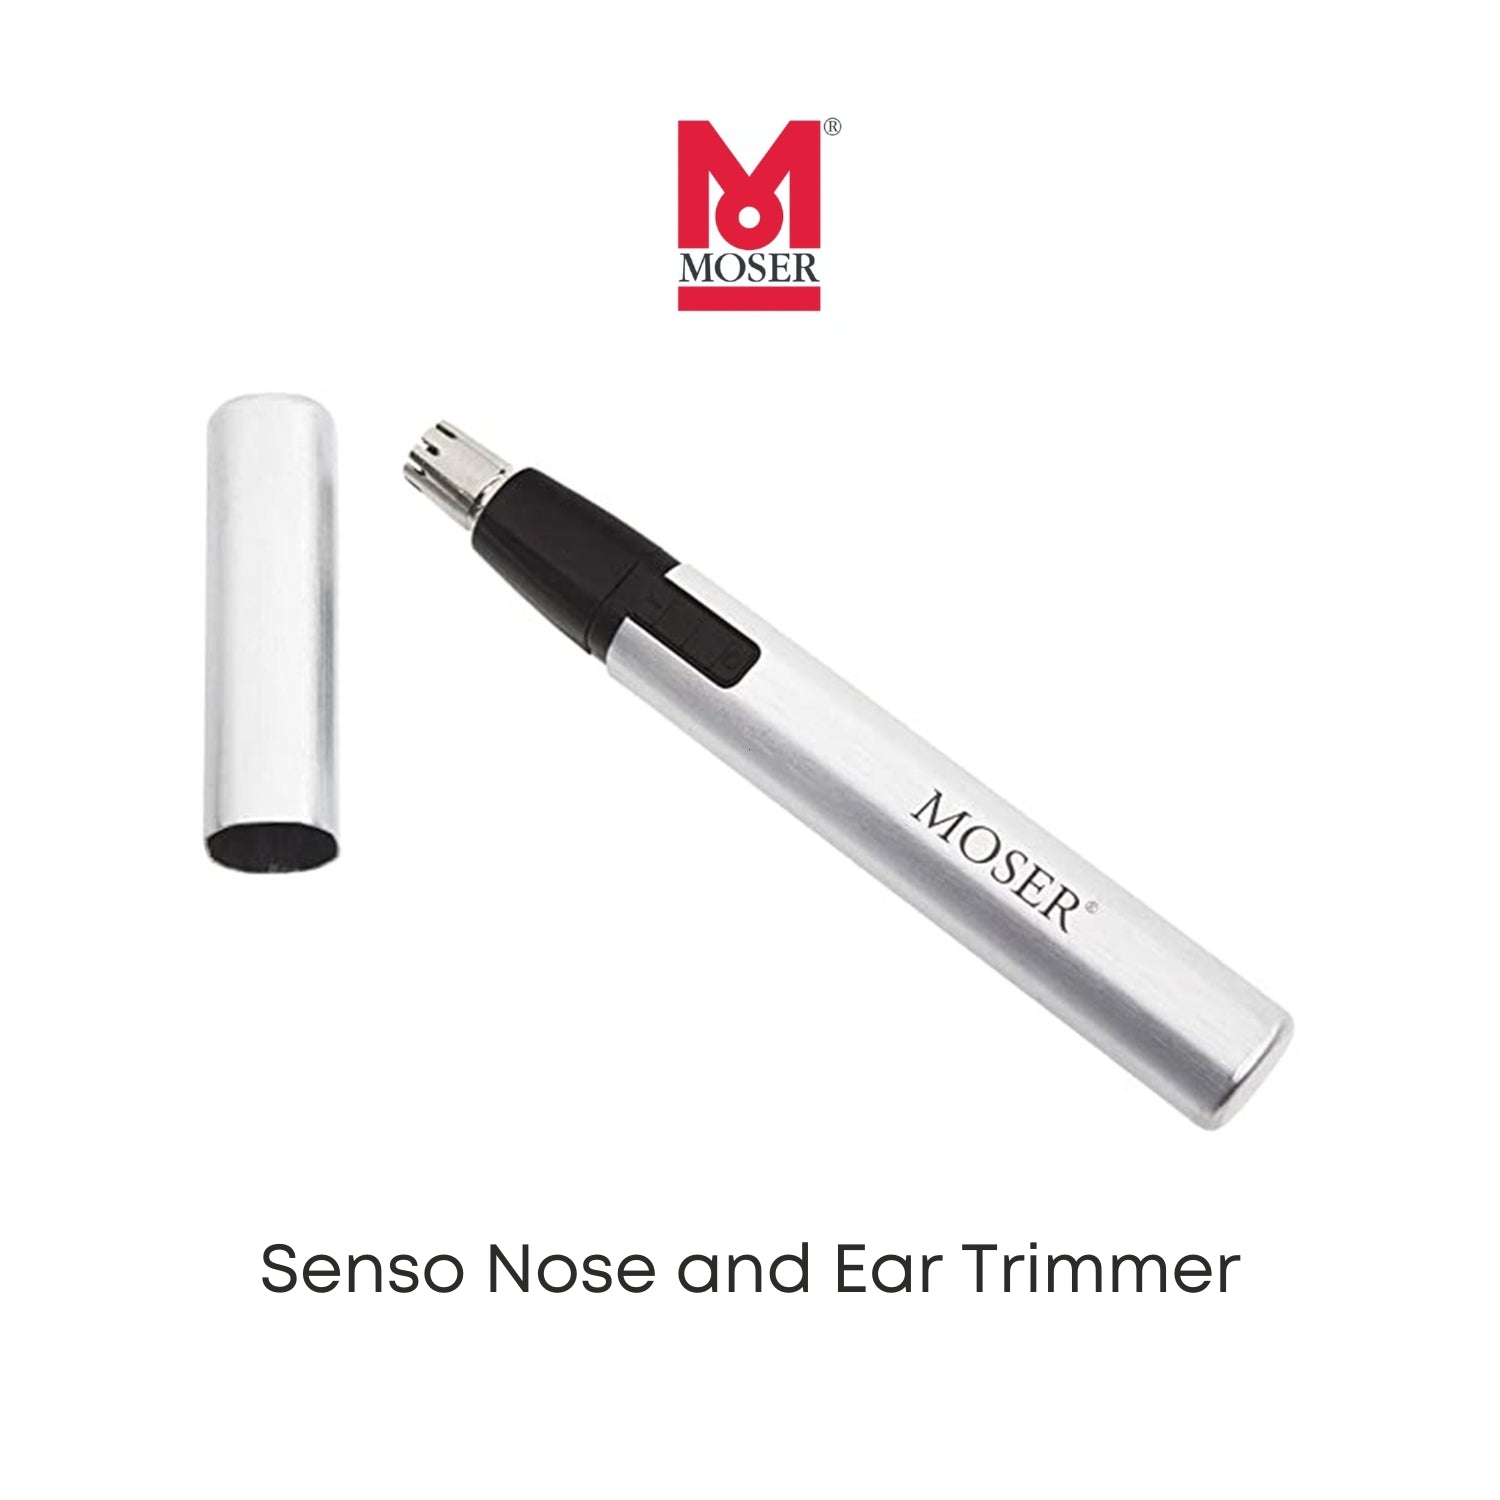 Moser Senso and Ear Trimmer – Turcamart ®